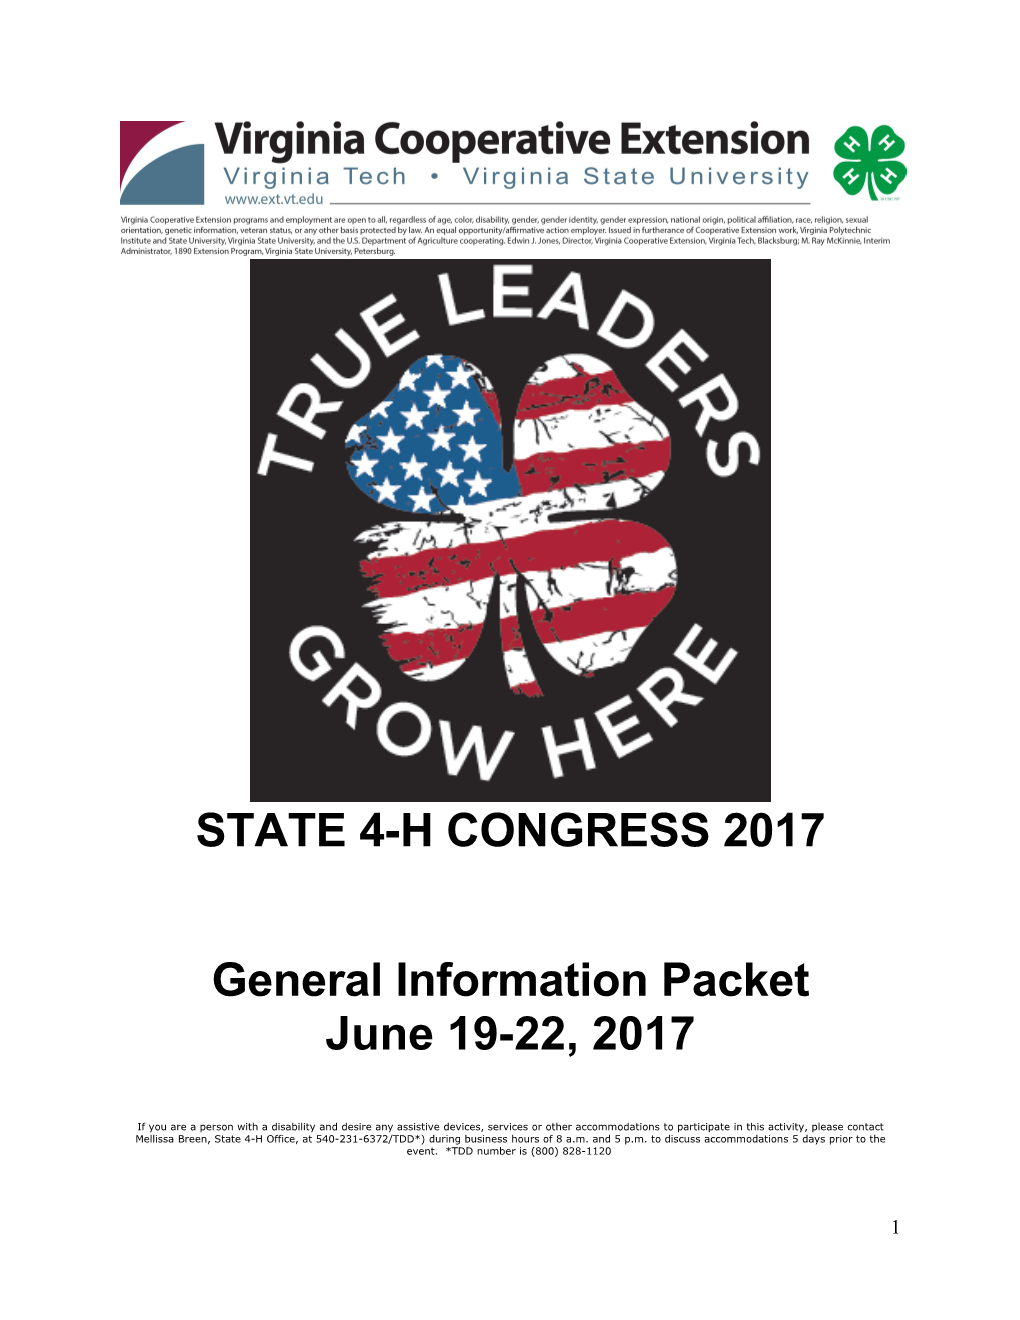 State 4-H Congress 2017